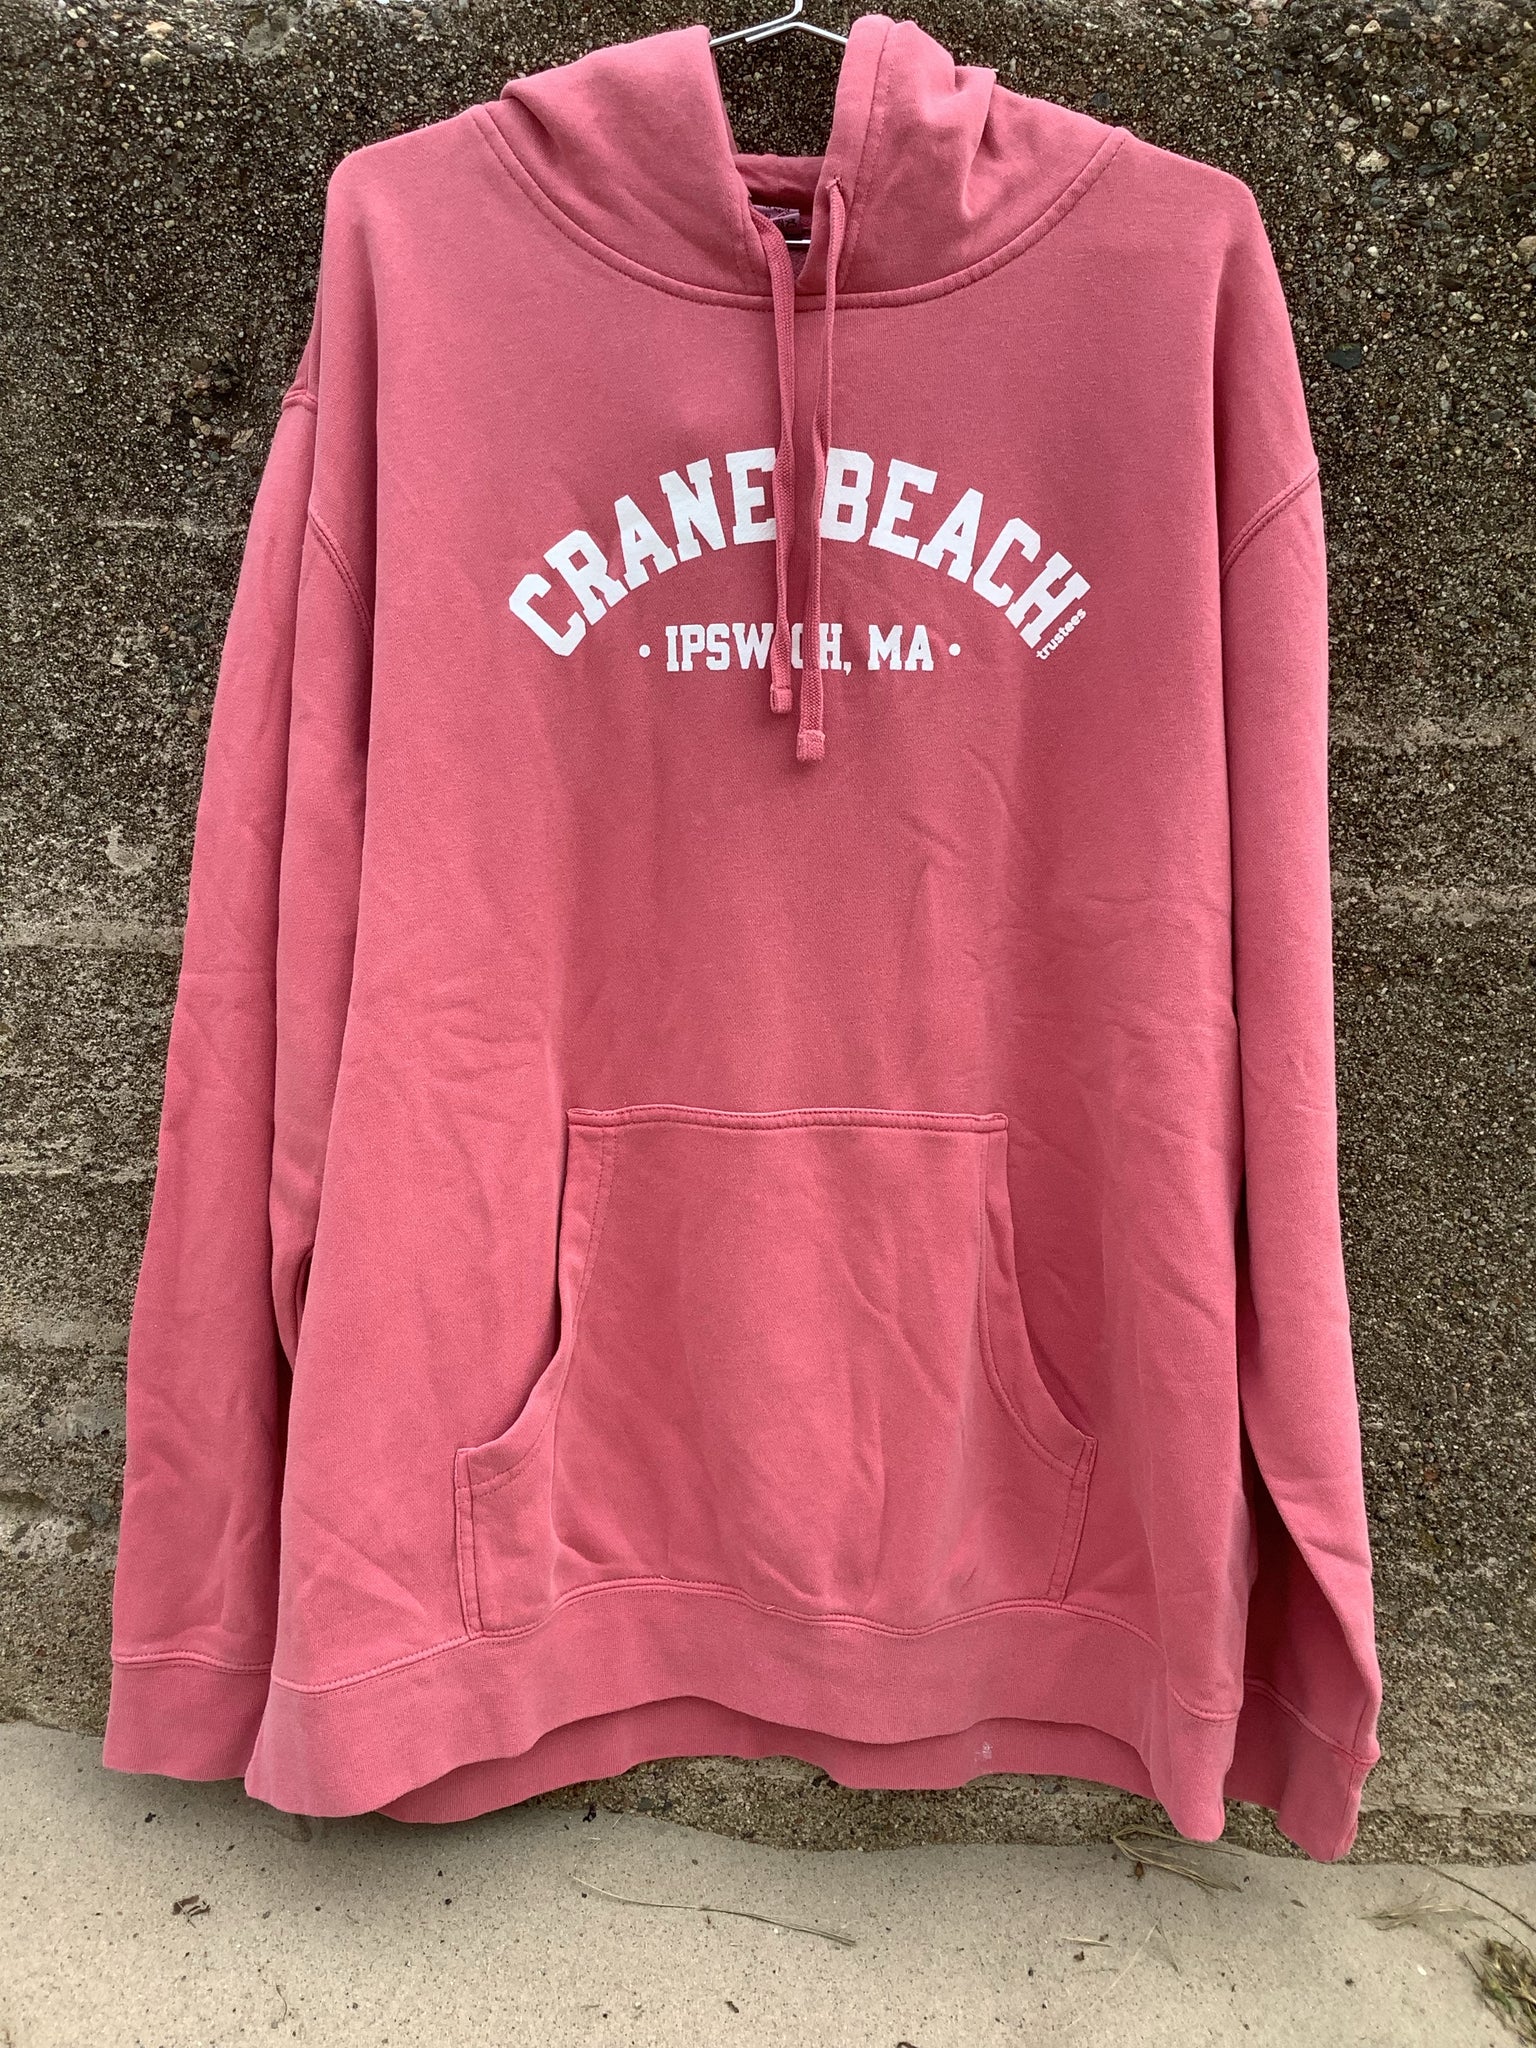 Crane Beach Hooded Sweatshirt – The Trustees